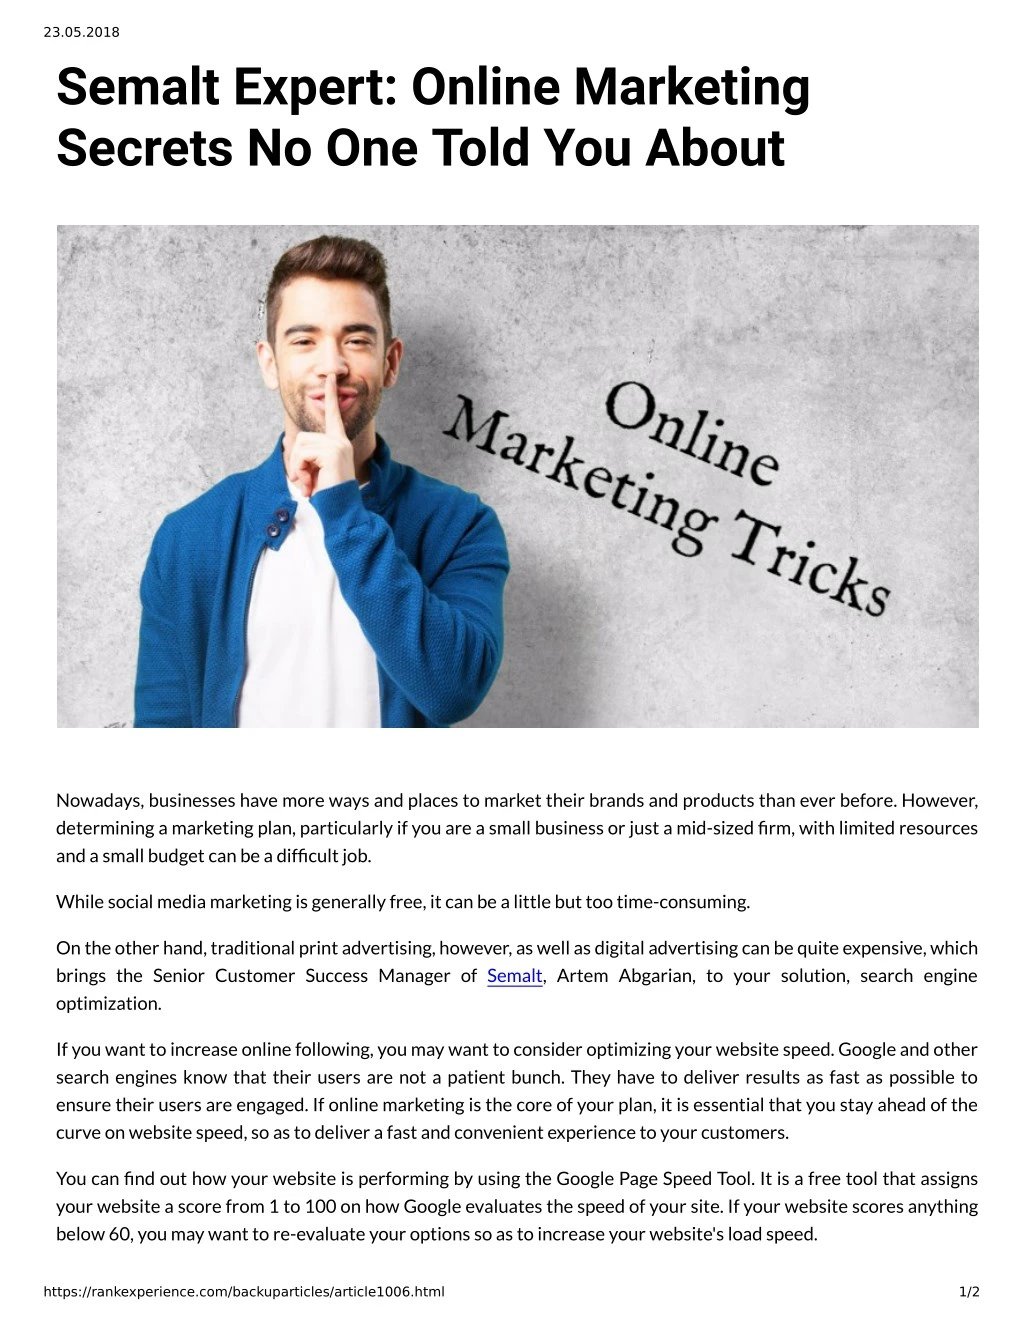 23 05 2018 semalt expert online marketing secrets